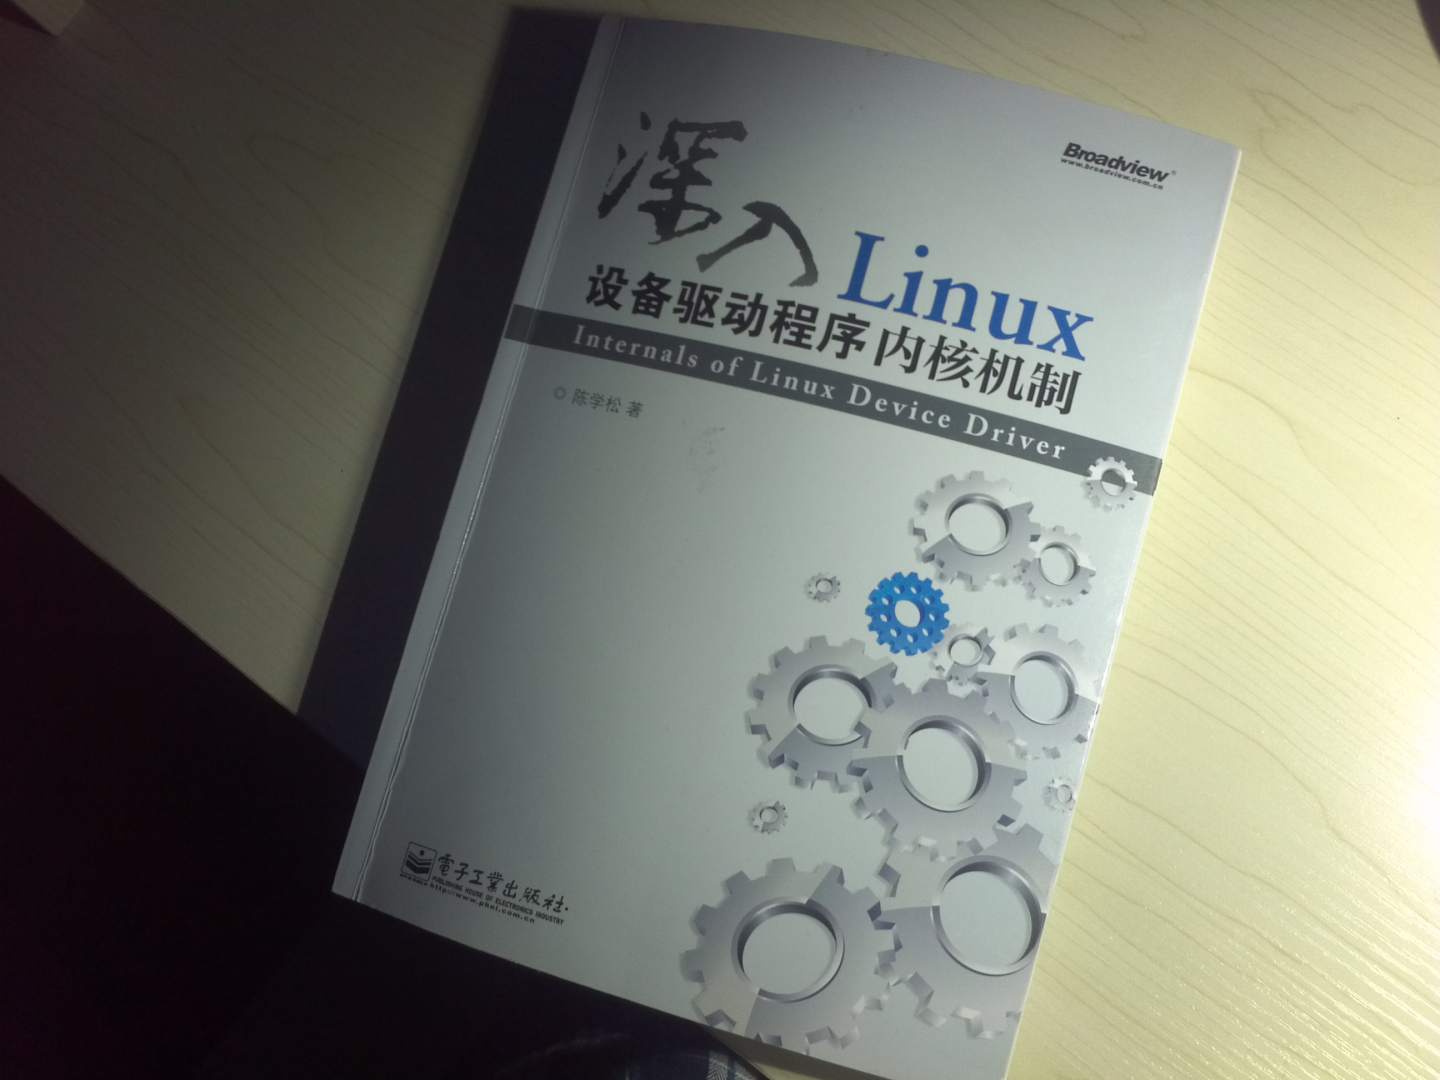 linux系统下嵌入式驱动_linux系统是什么系统_linux系统驱动开发